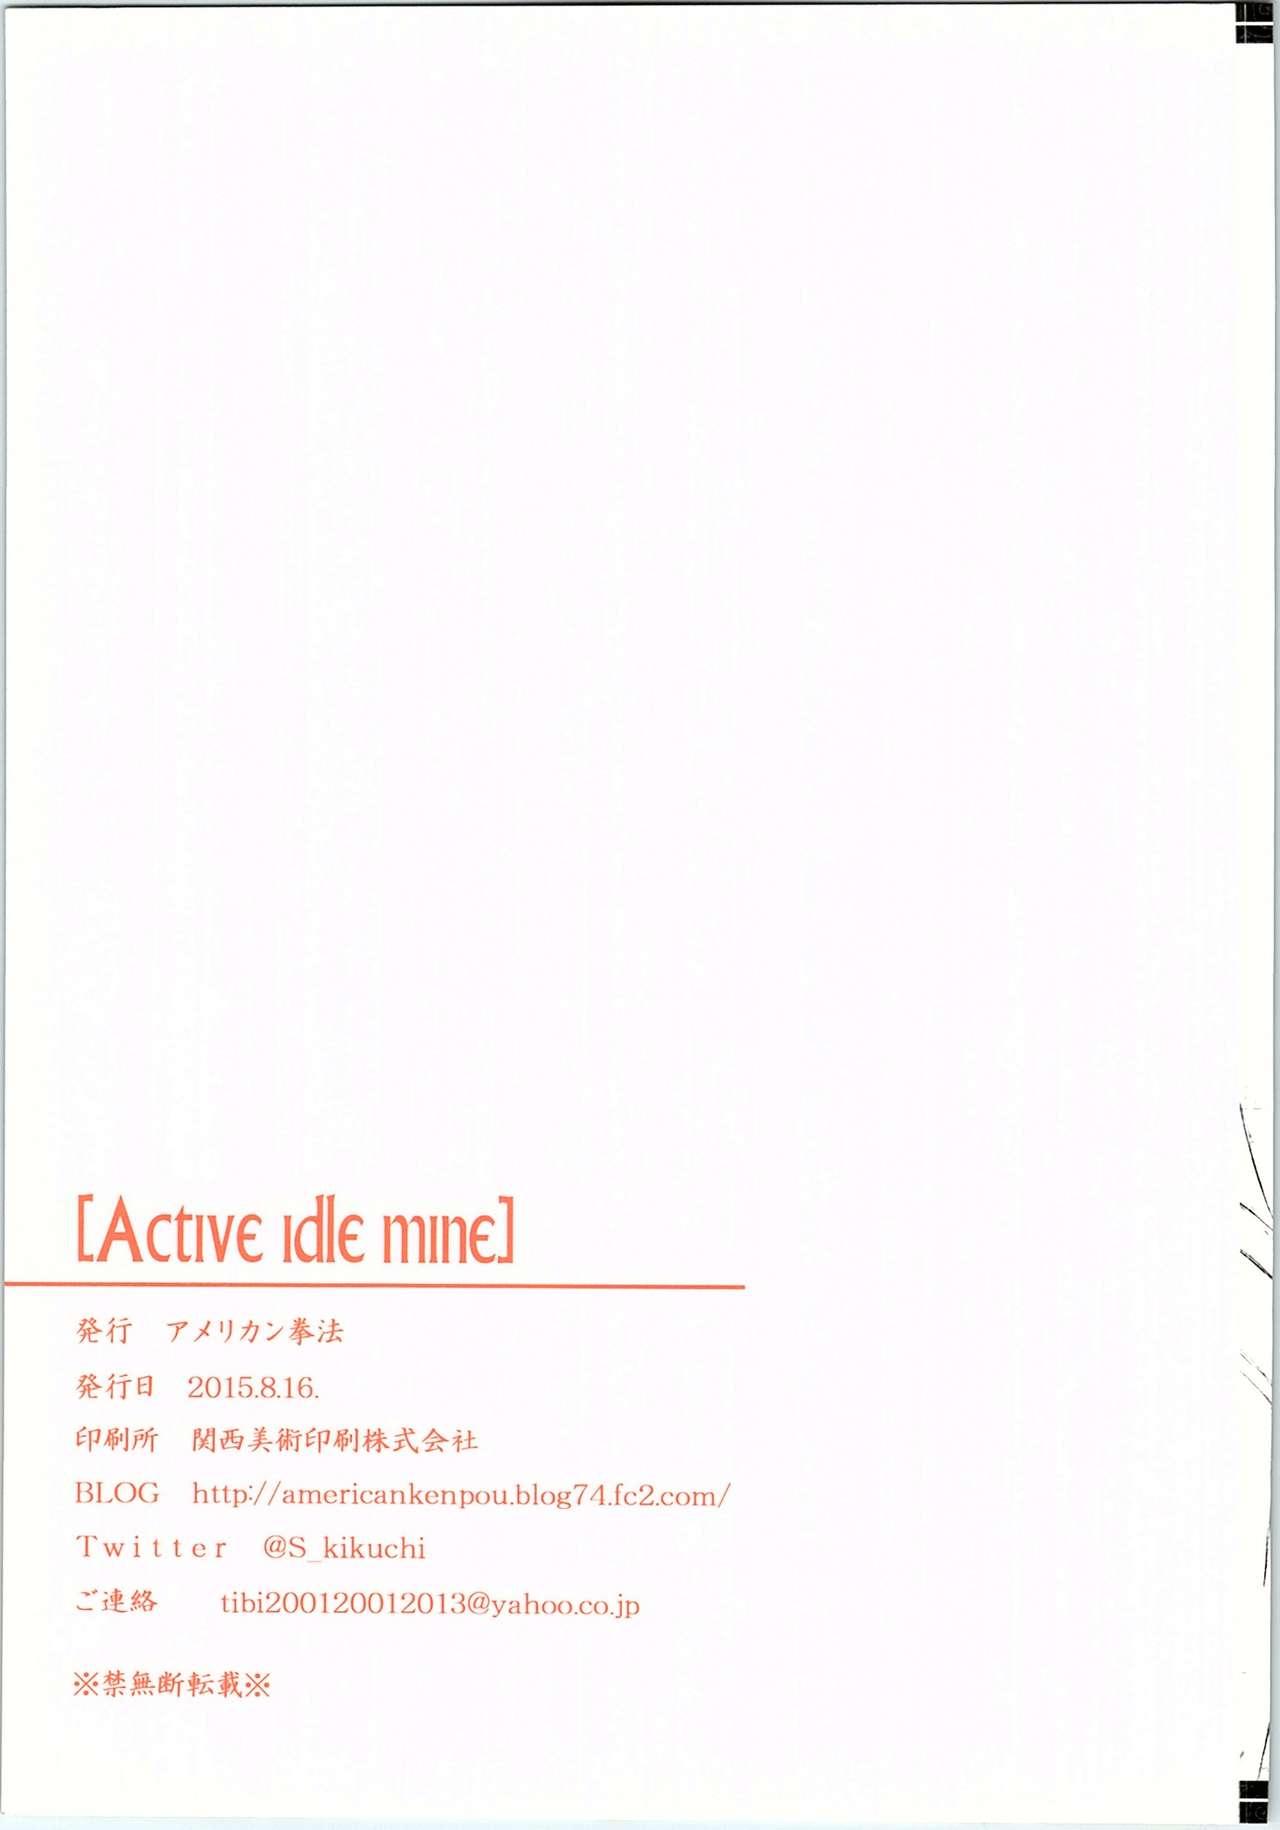 Active idle mine 48